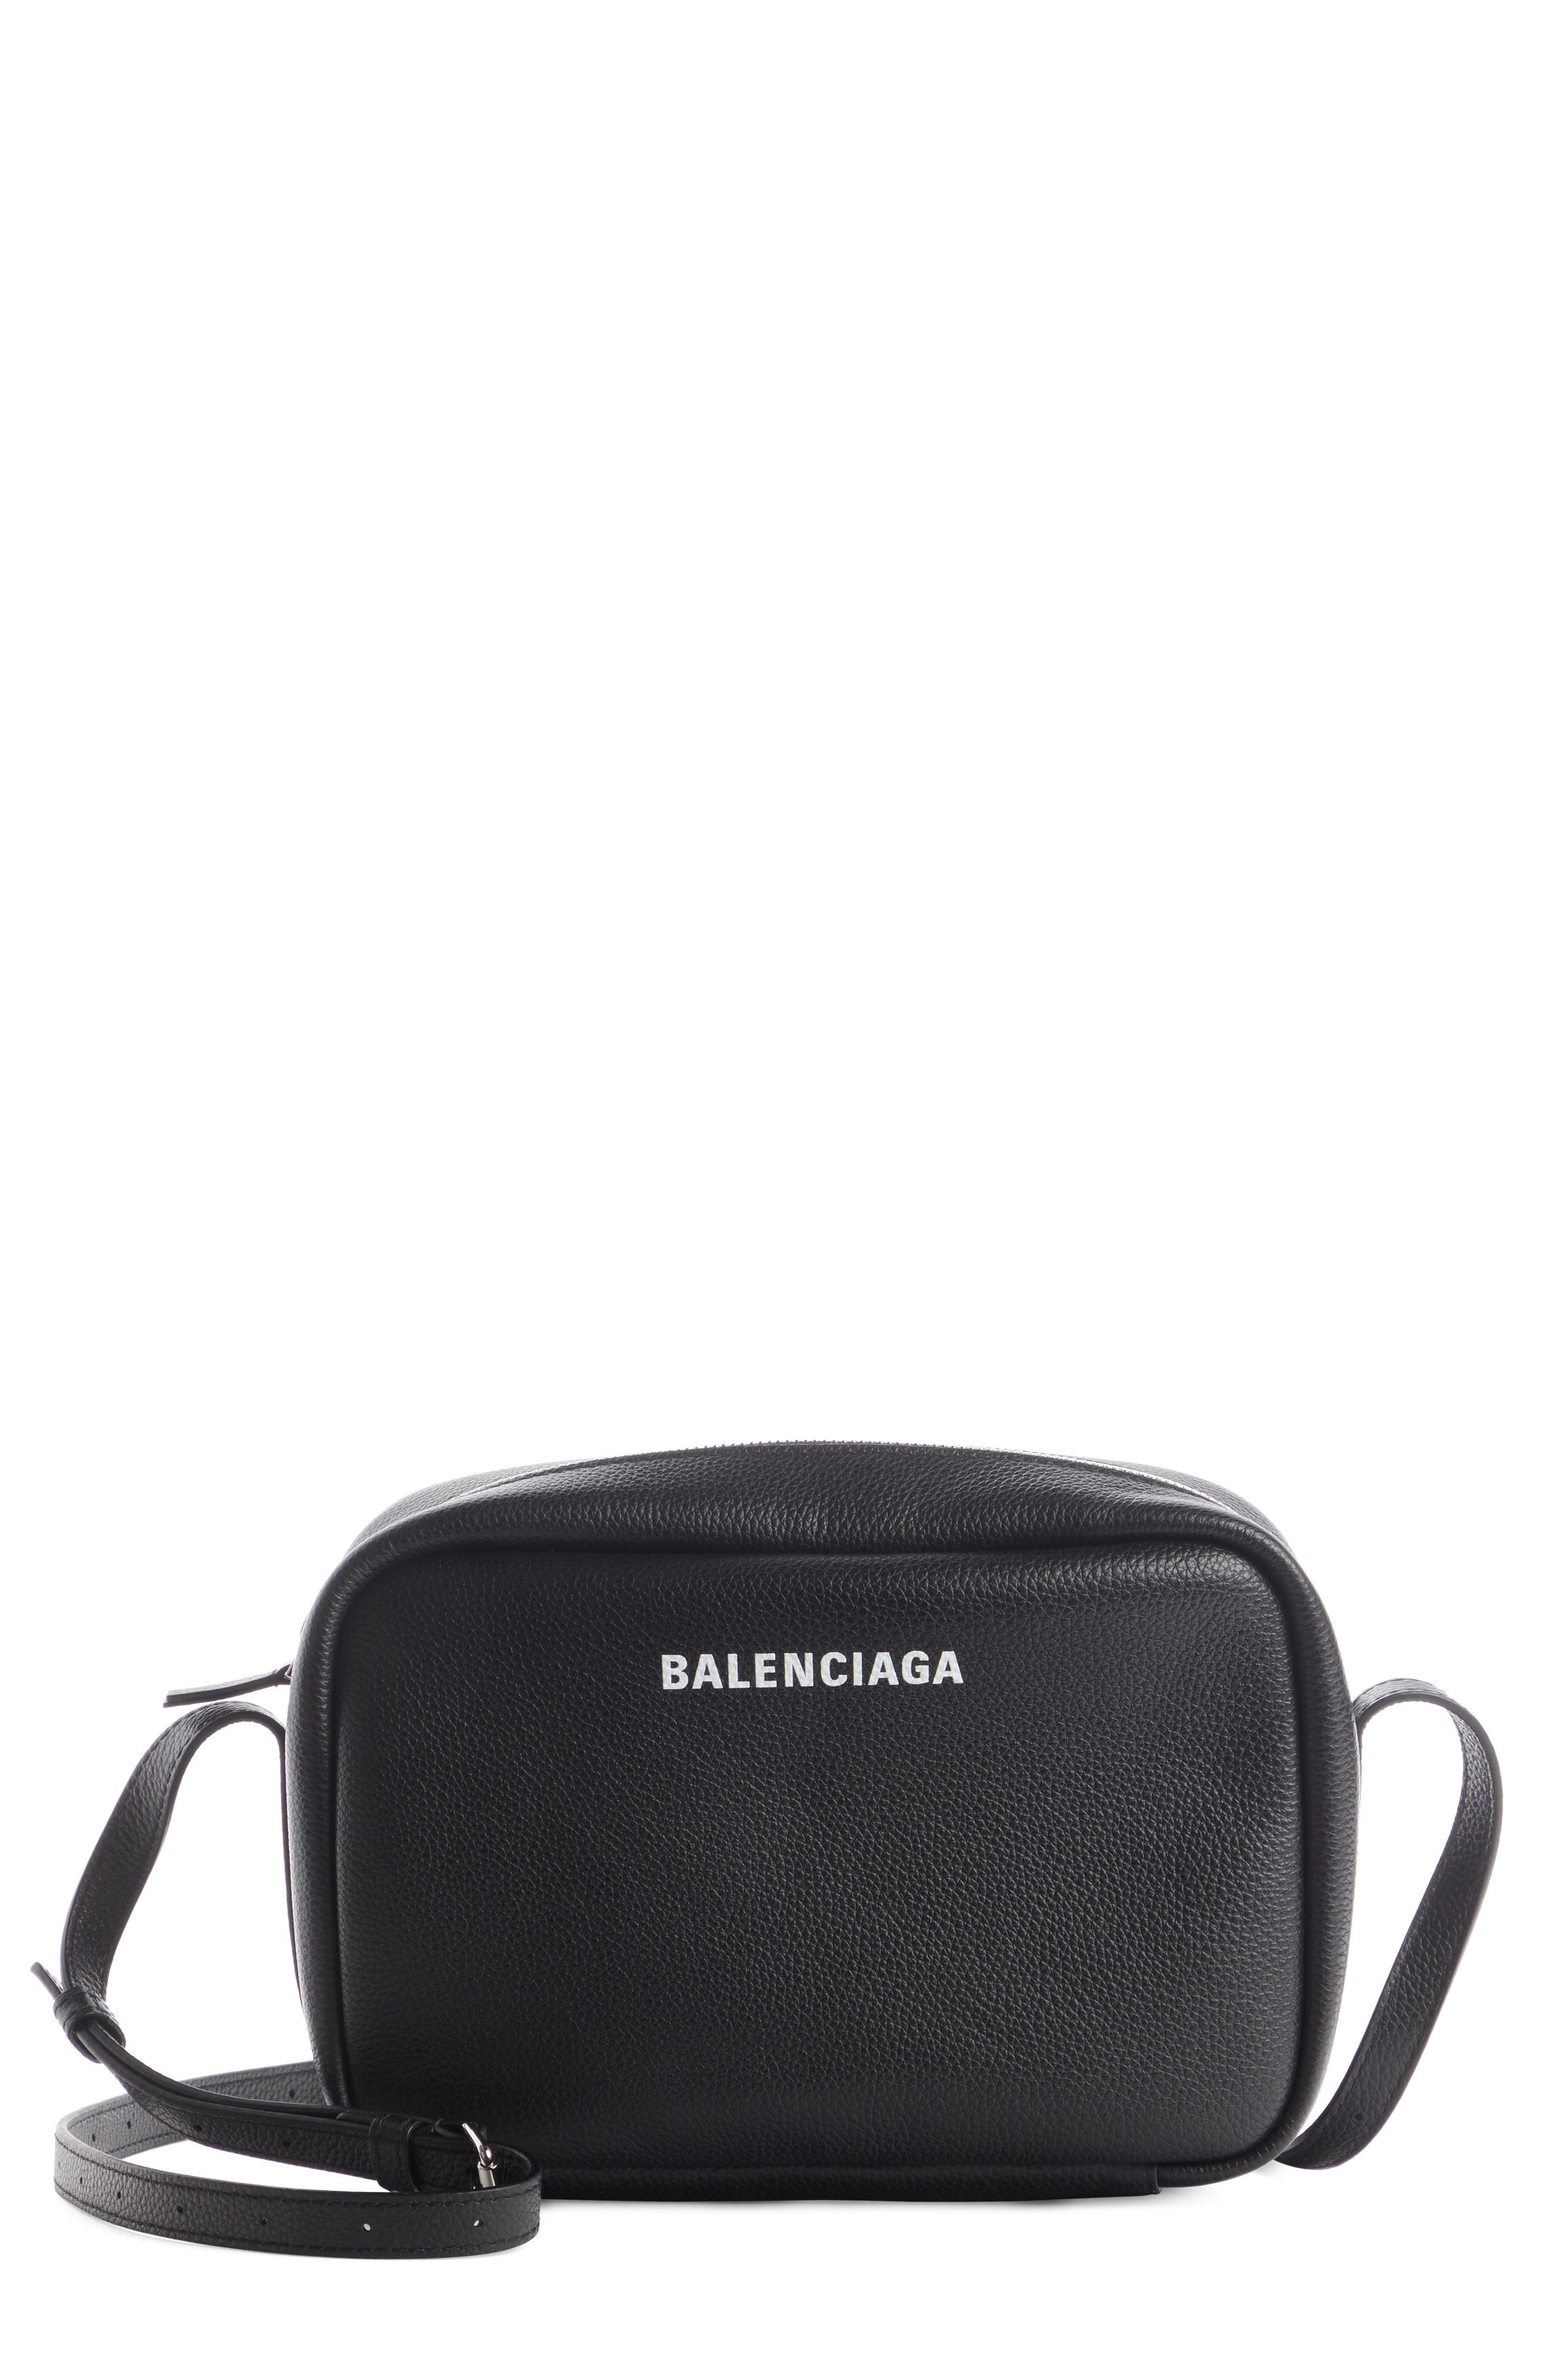 Balenciaga Medium Everyday Calfskin Leather Camera Bag in Black/White at Nordstrom